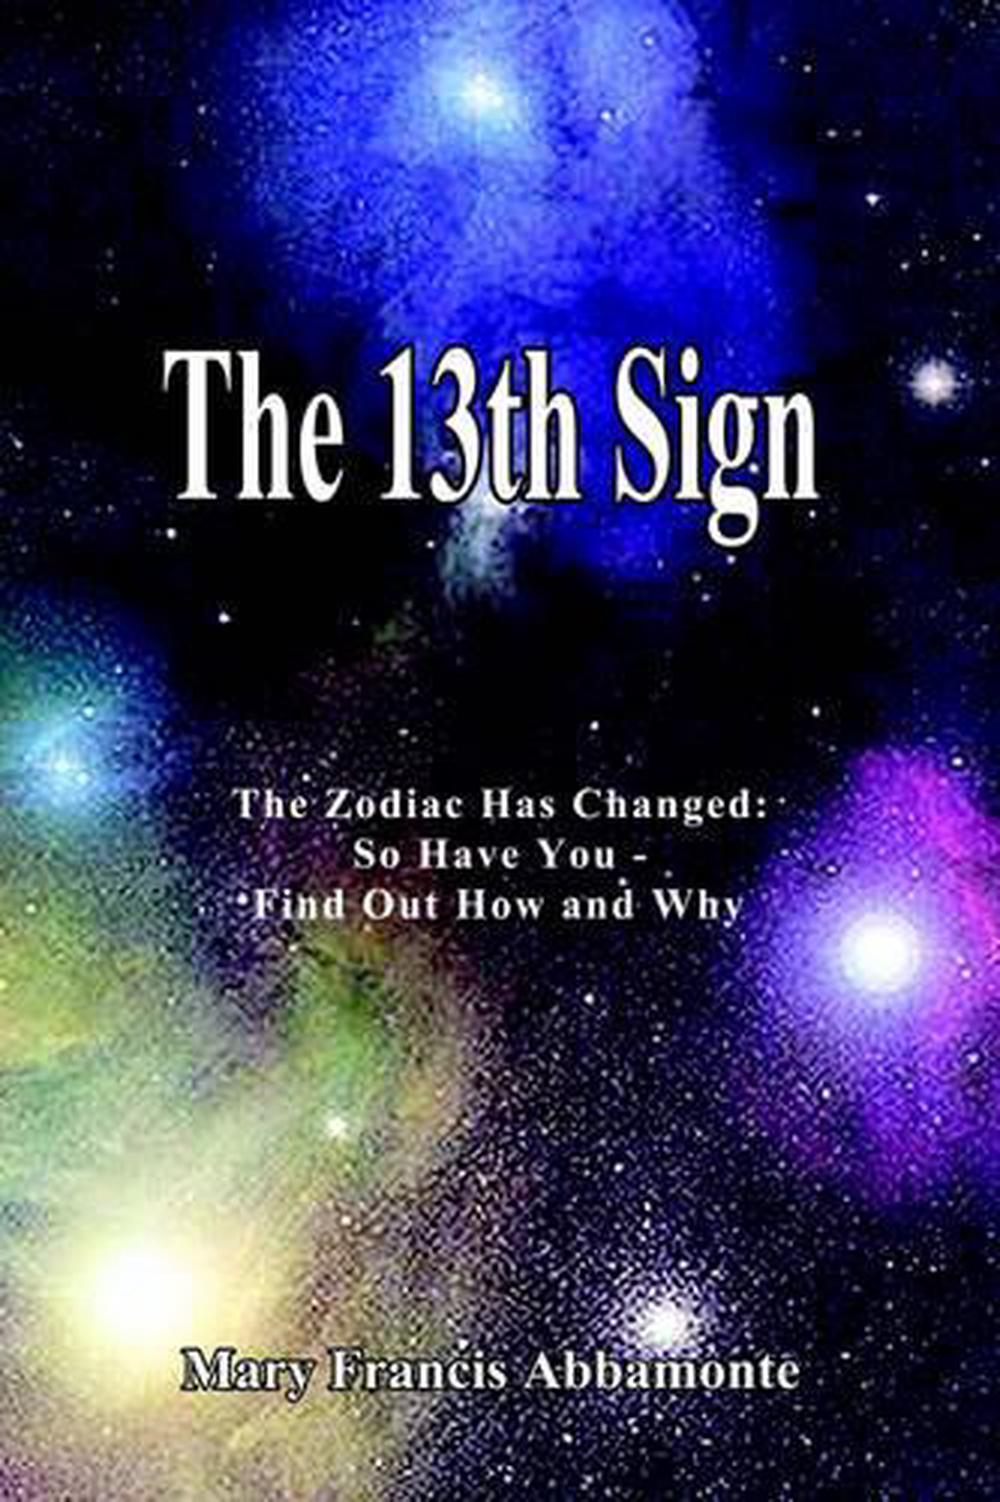 scorpio sagittarius 13th sign astrology